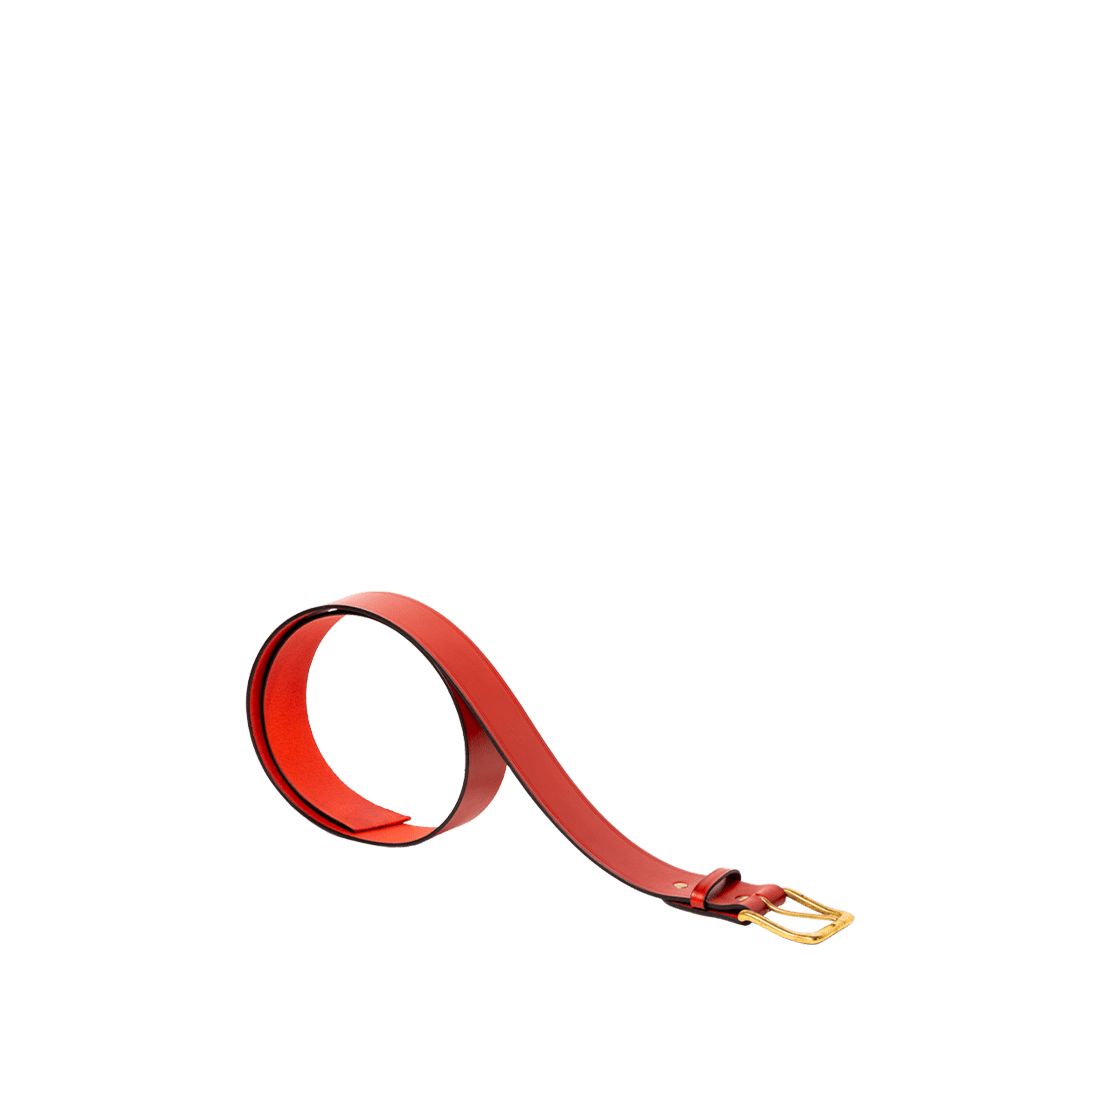 Men's leather Kilt's belts in Italian saddle hide red colour, handmade by Mackenzie Leather Edinburgh.